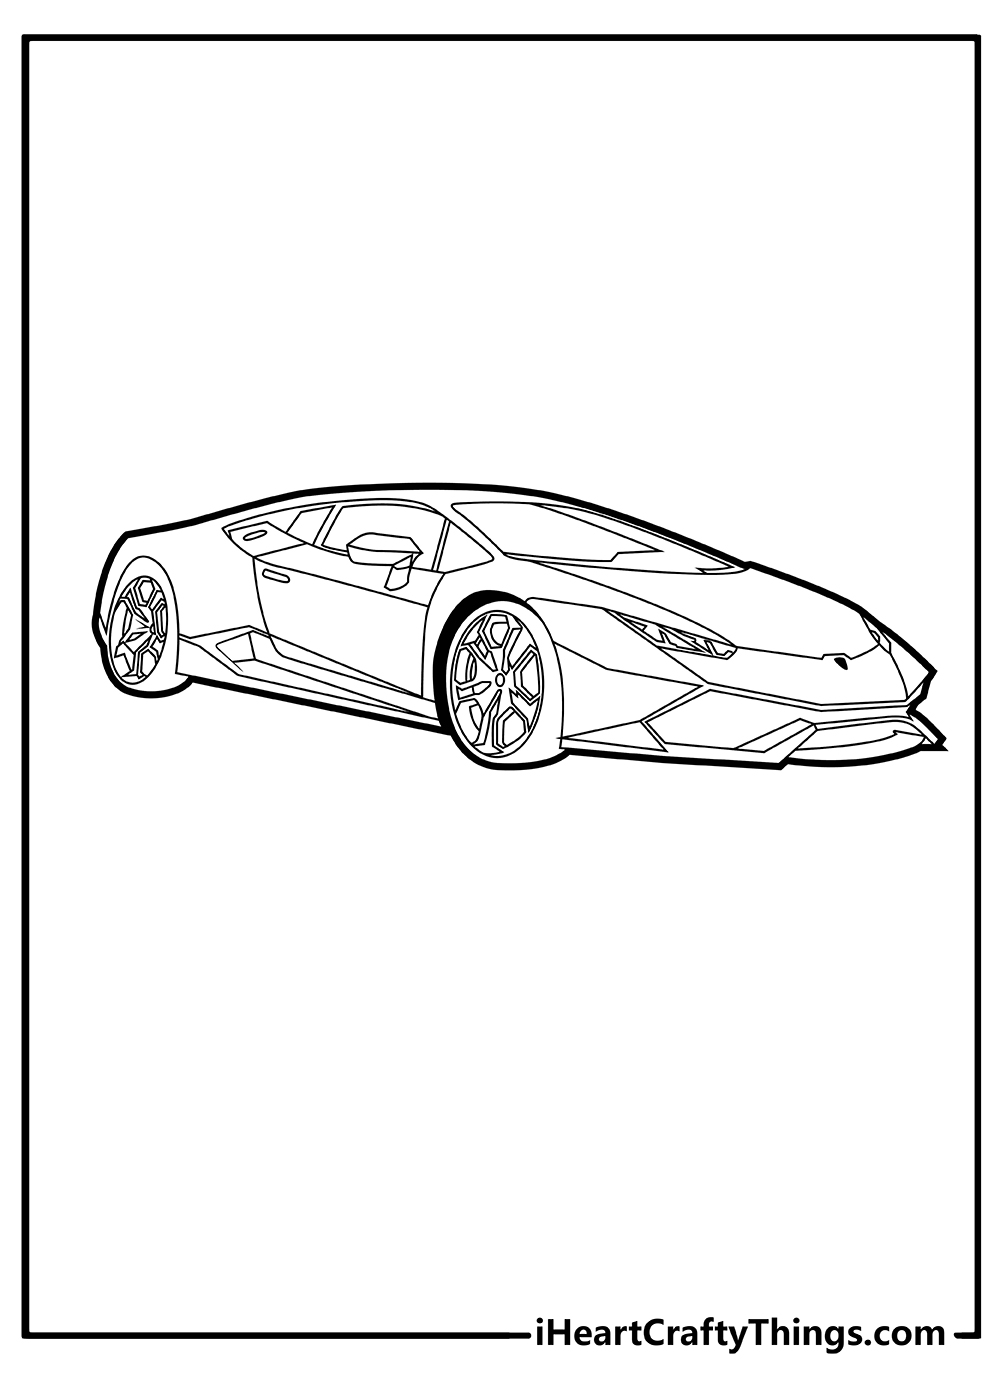 Lamborghini Coloring Pages free pdf download